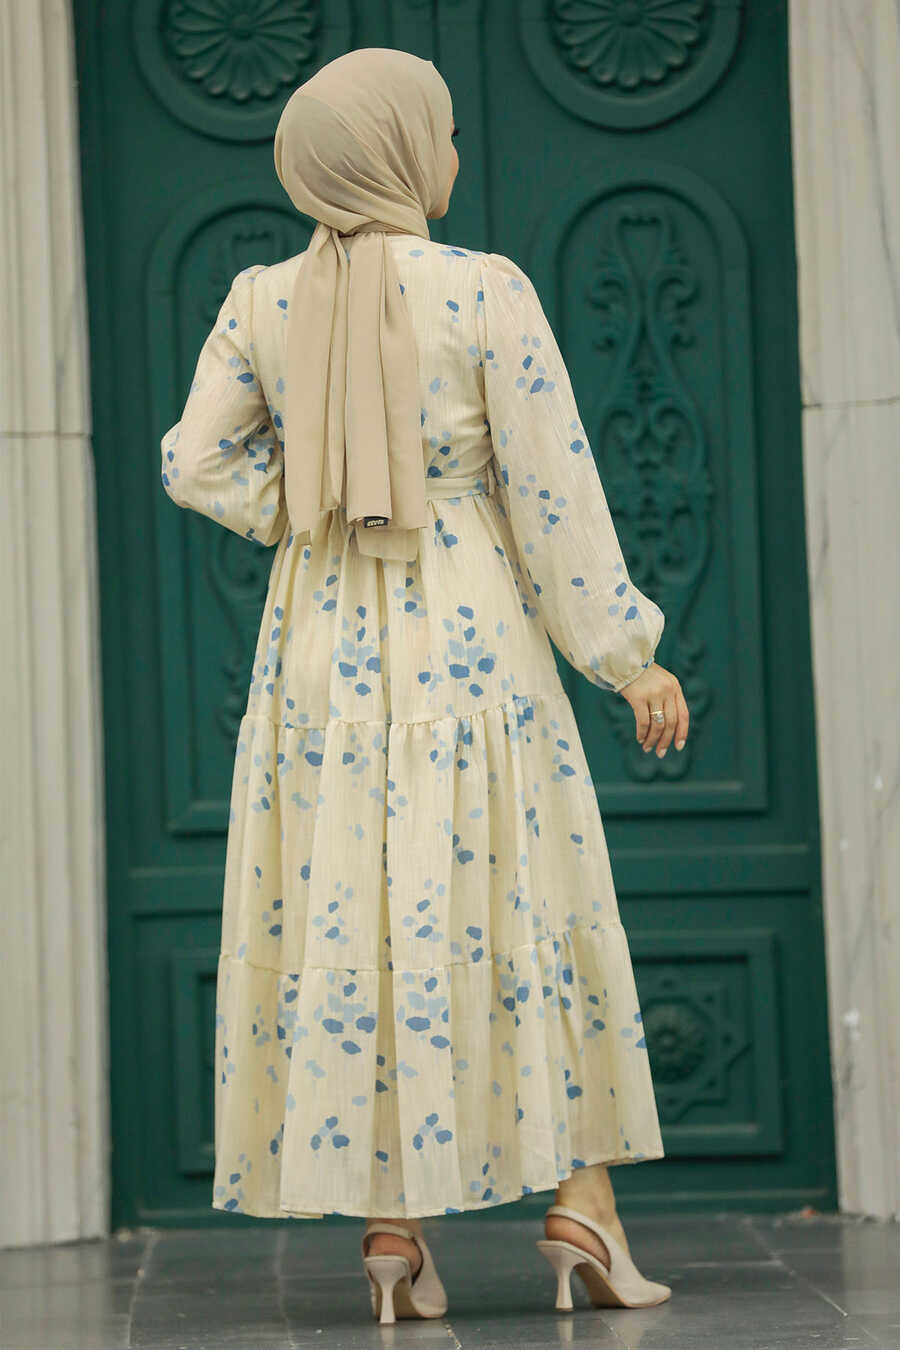 Buy Huaheng Womens Islamic Muslim Dress Long Sleeve Printed Ethnic Style  Long Dress 2XL Sky Blue at Amazon.in